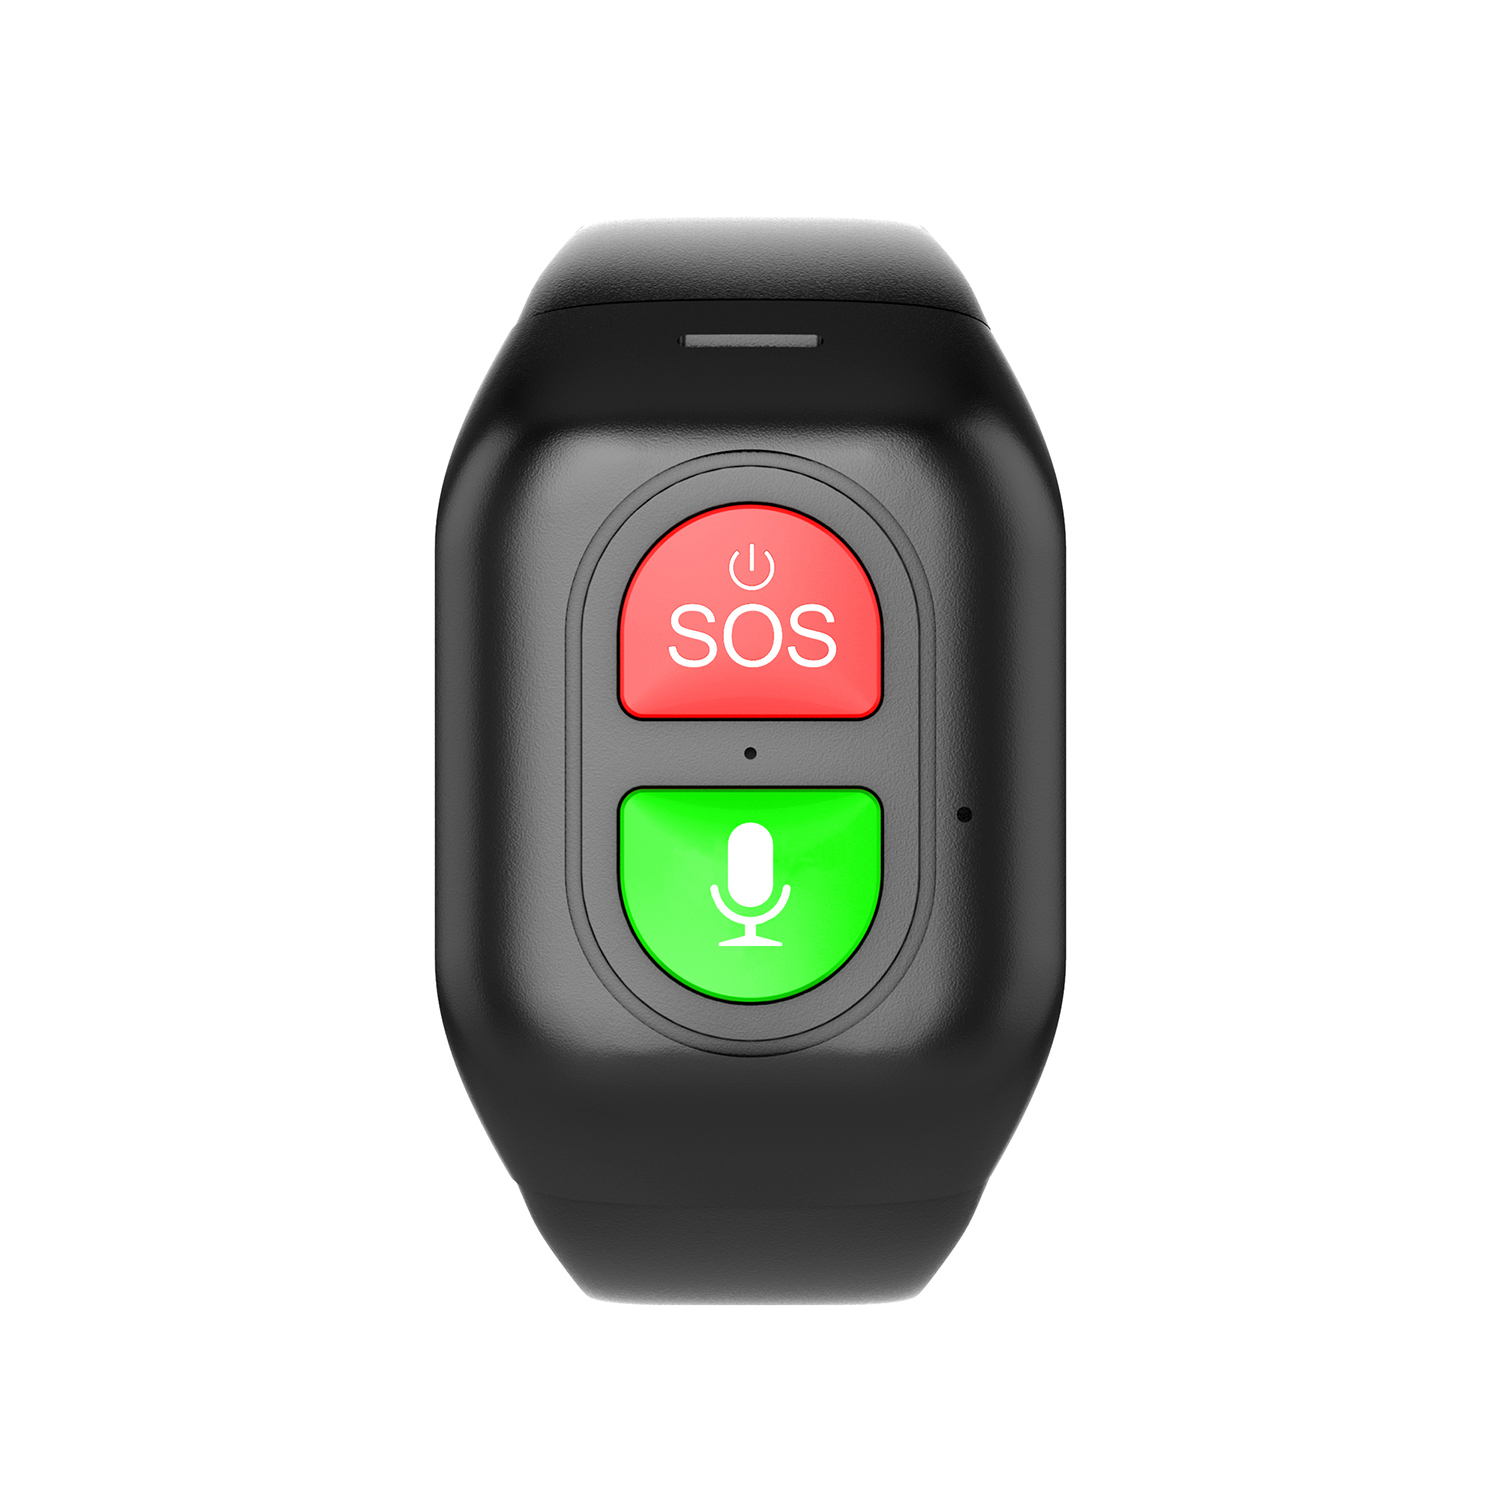 4G Waterproof GPS Bracelet Tracker with HR BP body temperature fall alert